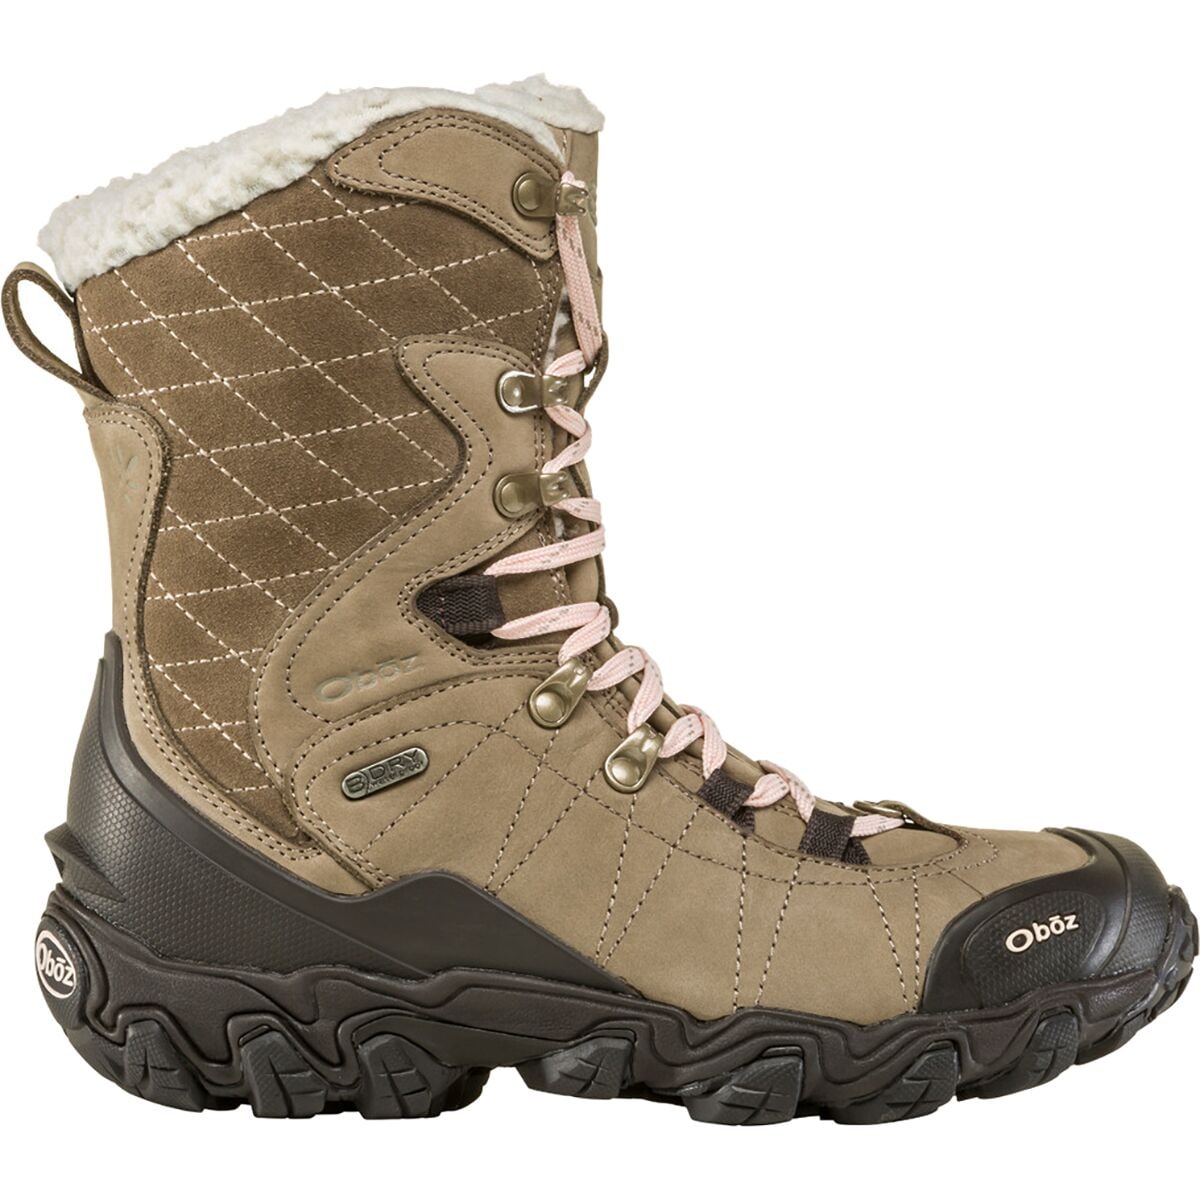 Bridger 9in Insulated B-Dry Wide Boot - Women